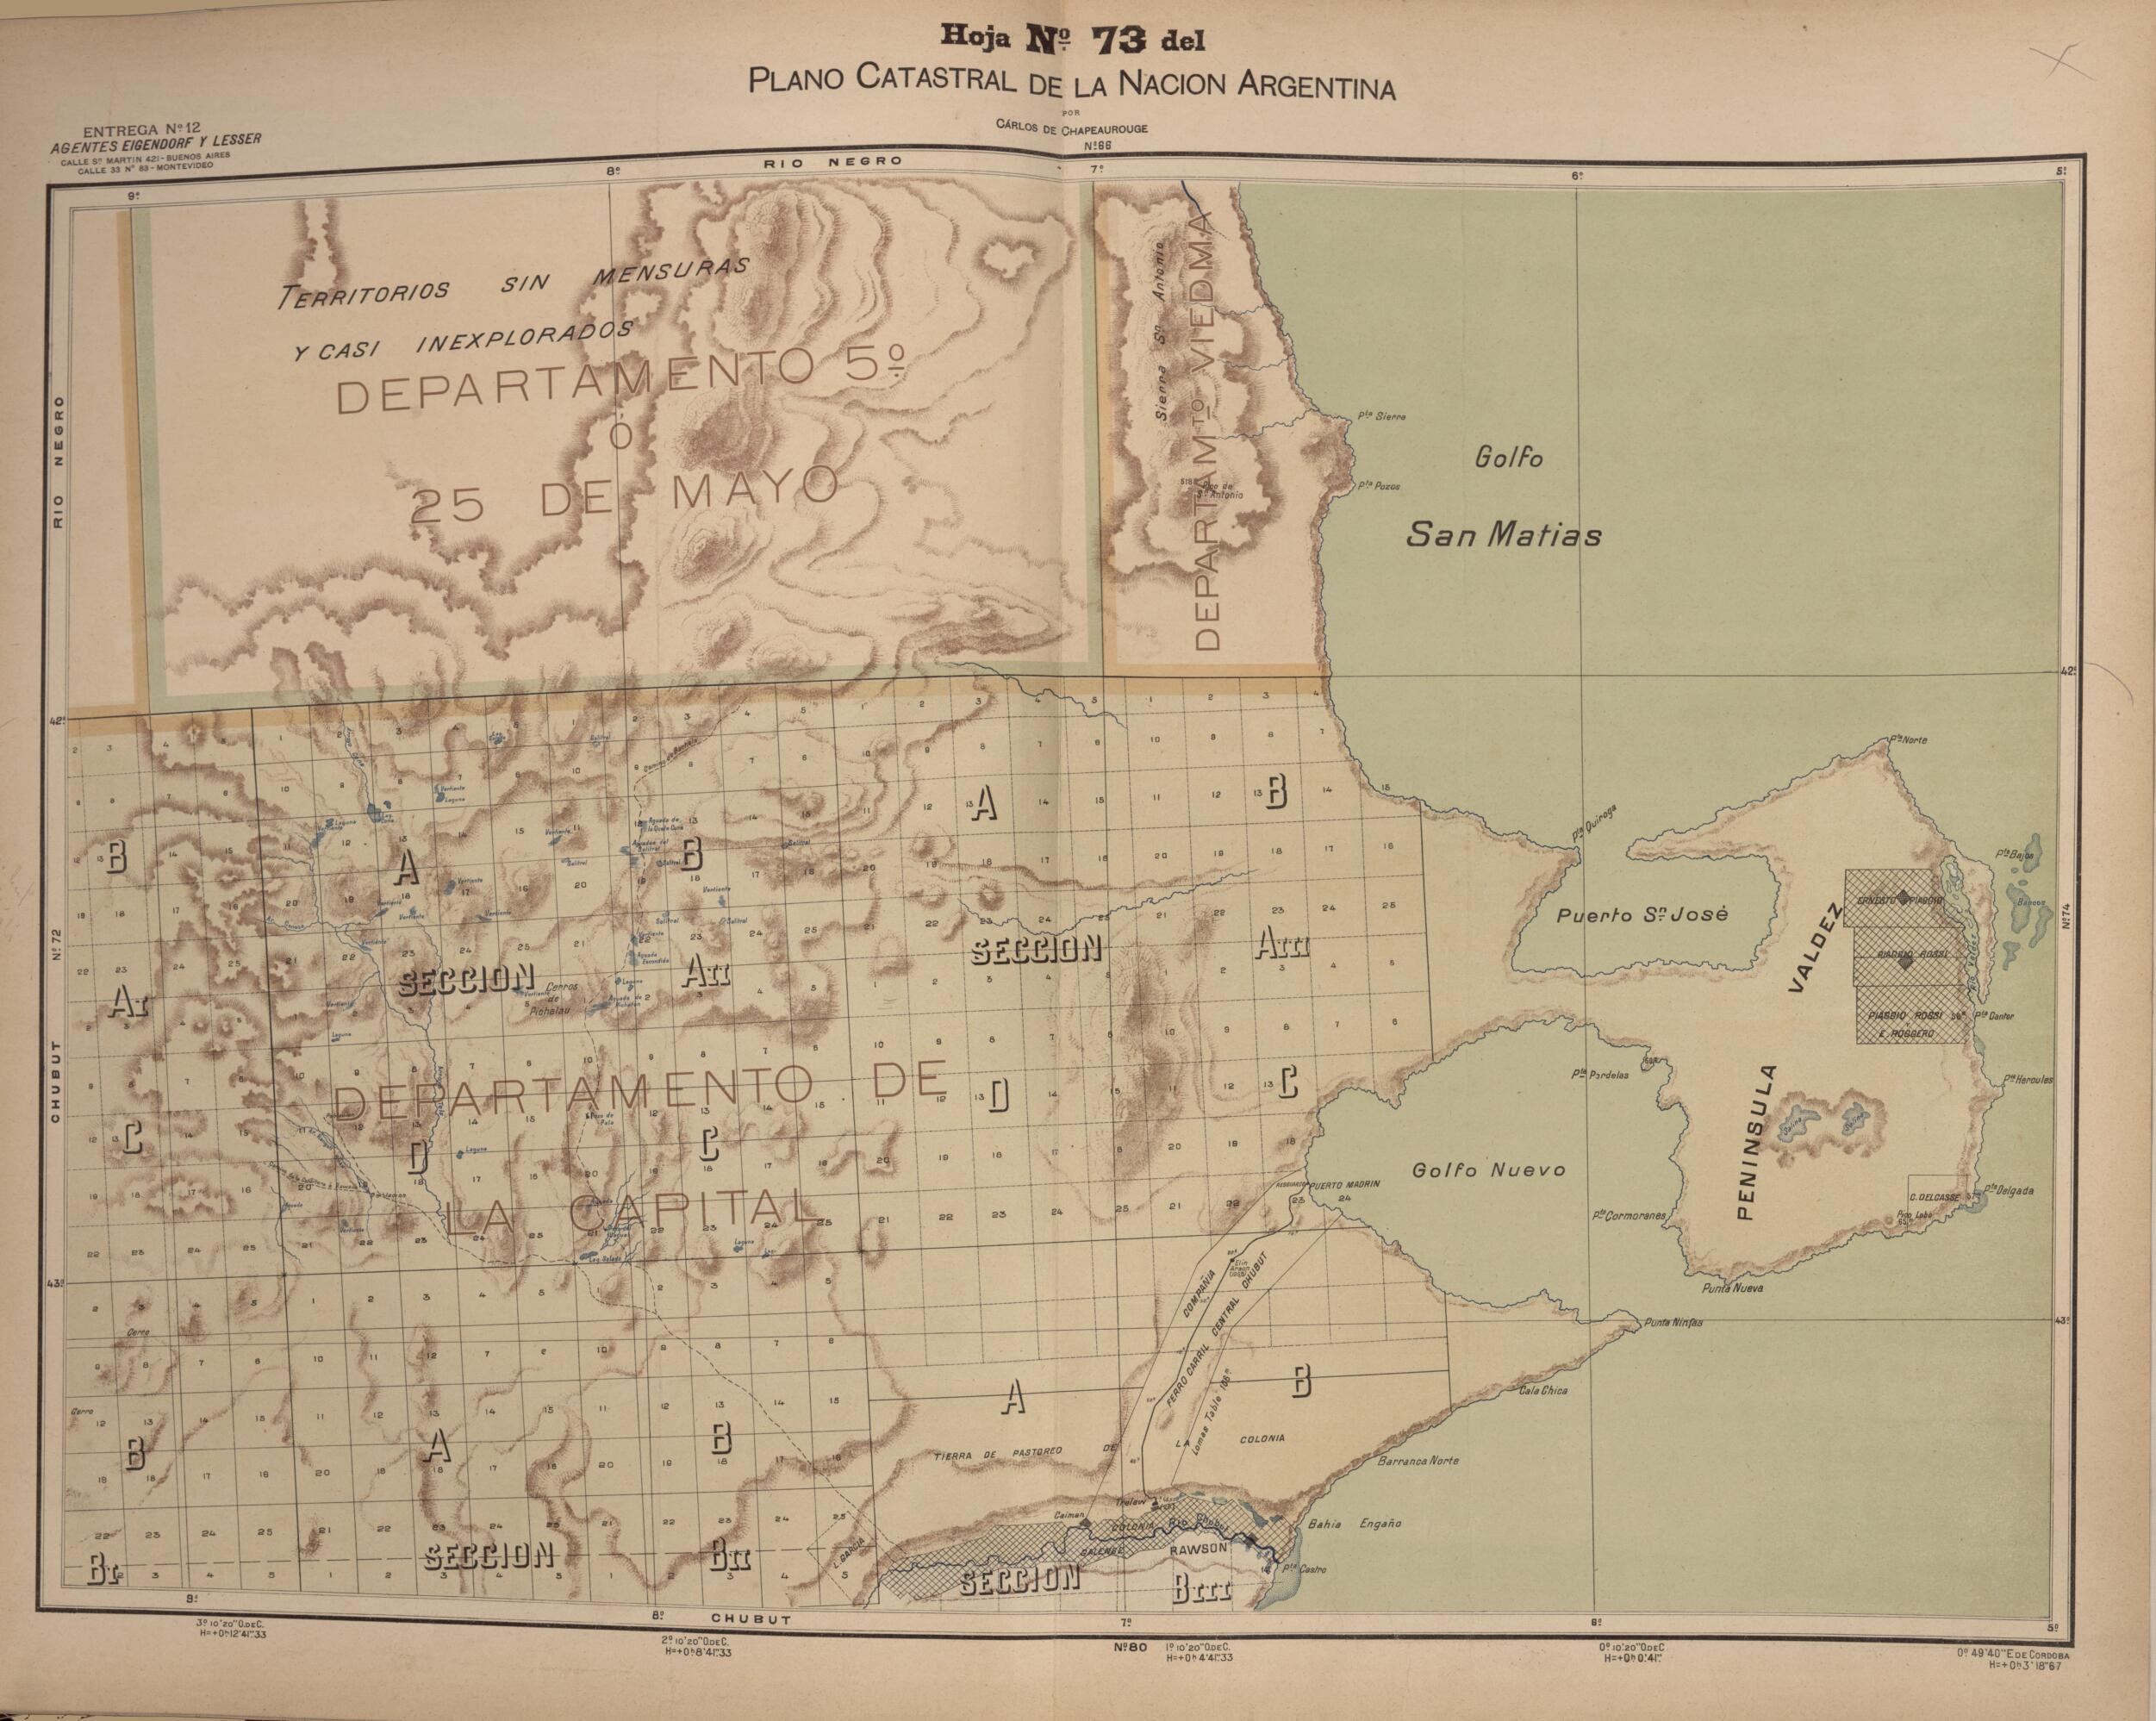 This old map of Plano Catastral De La Nacion Hoja No. 73 from República Argentina from 1905 was created by Carlos De Chapeaurouge in 1905